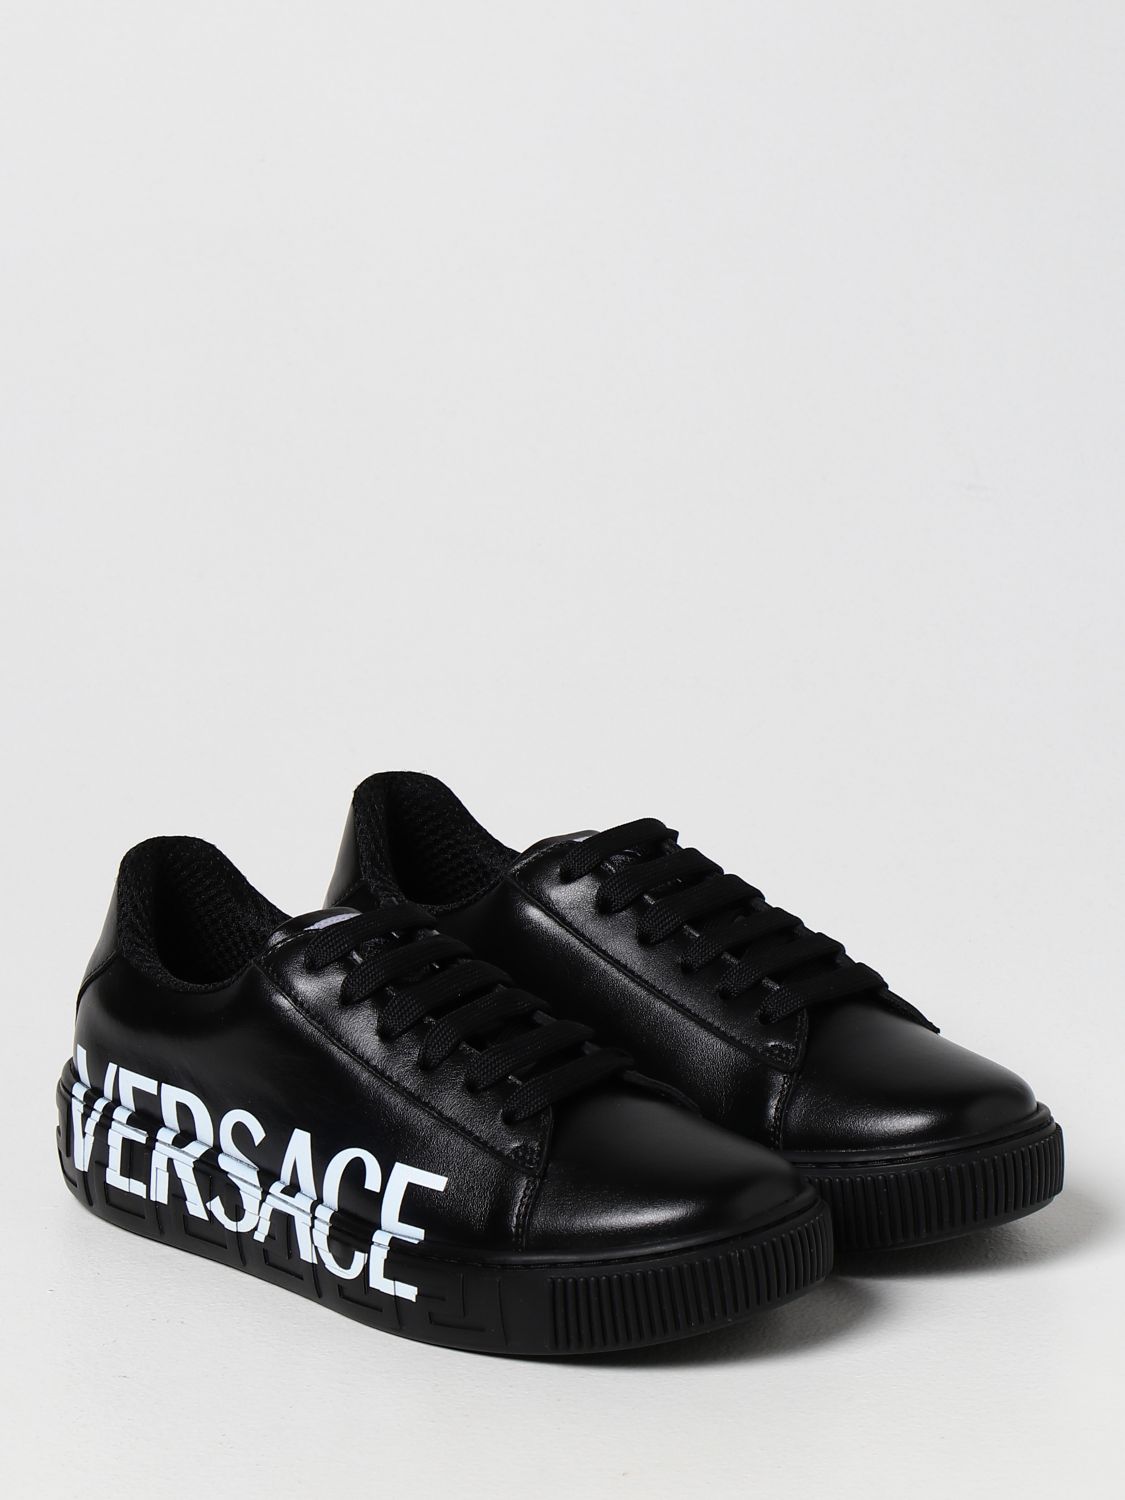 Schuhe Young Versace: Young Versace Jungen Schuhe schwarz 2